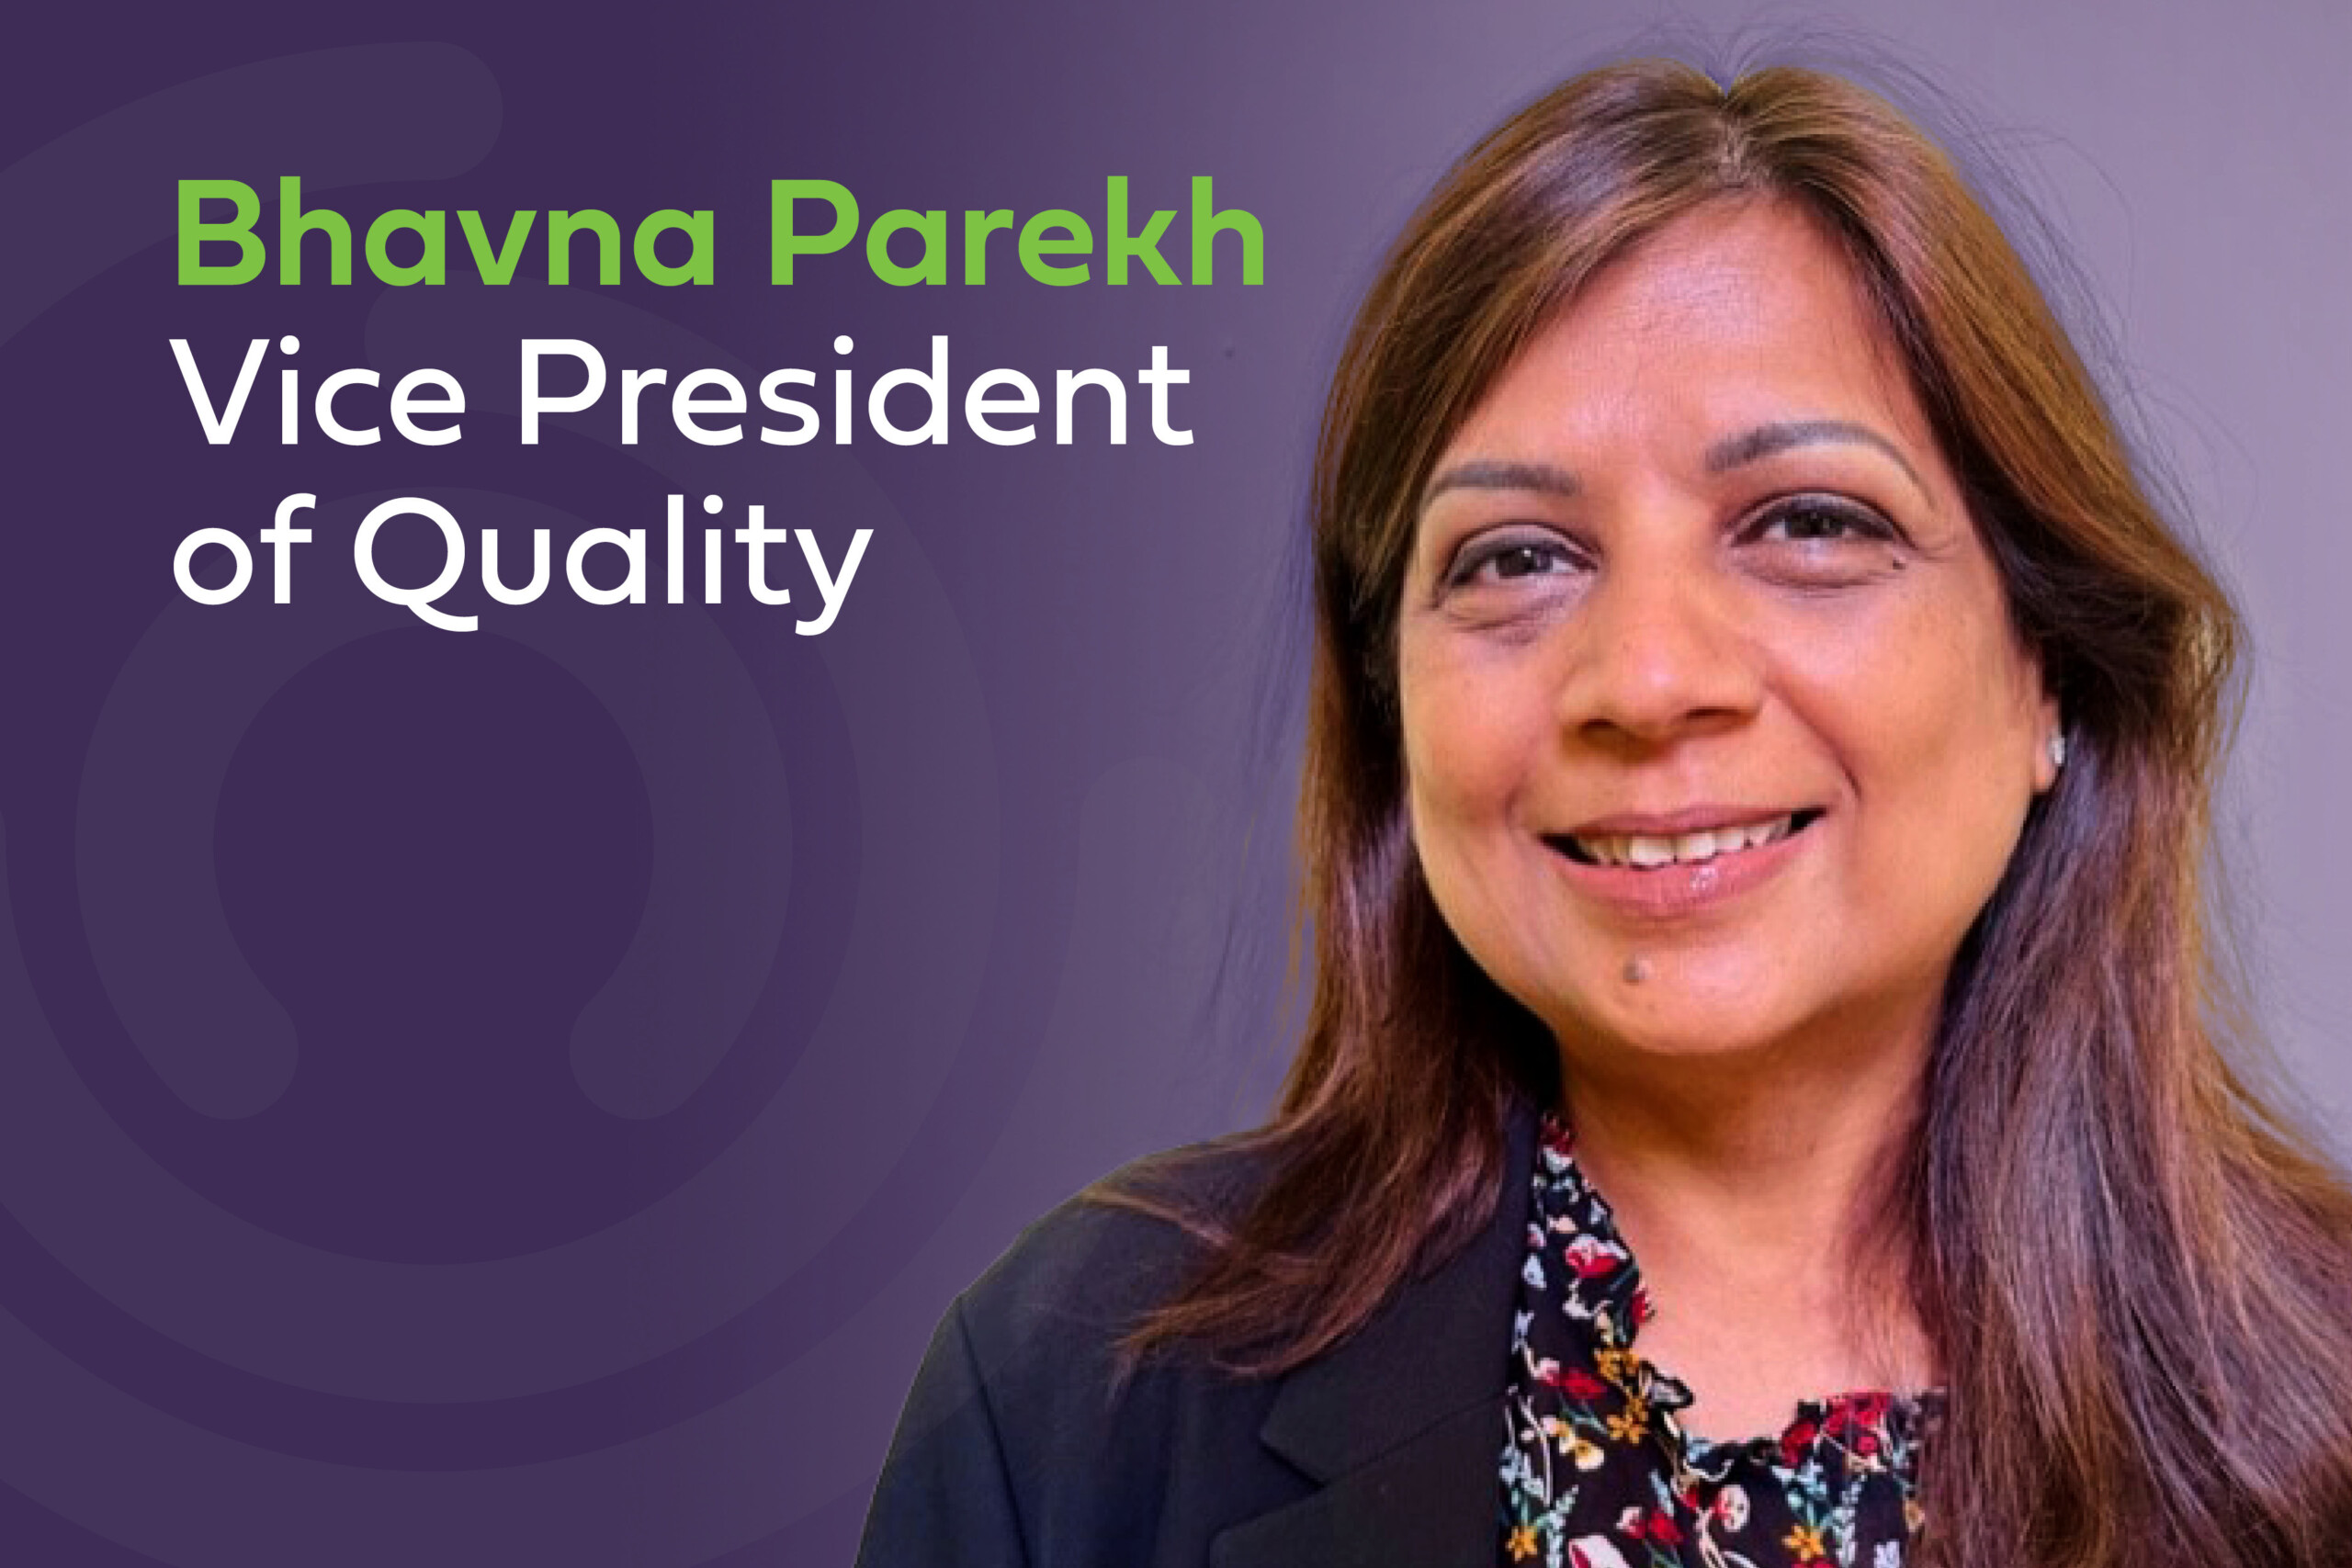 BioTouch's Vice President of Quality Bhavna Parekh